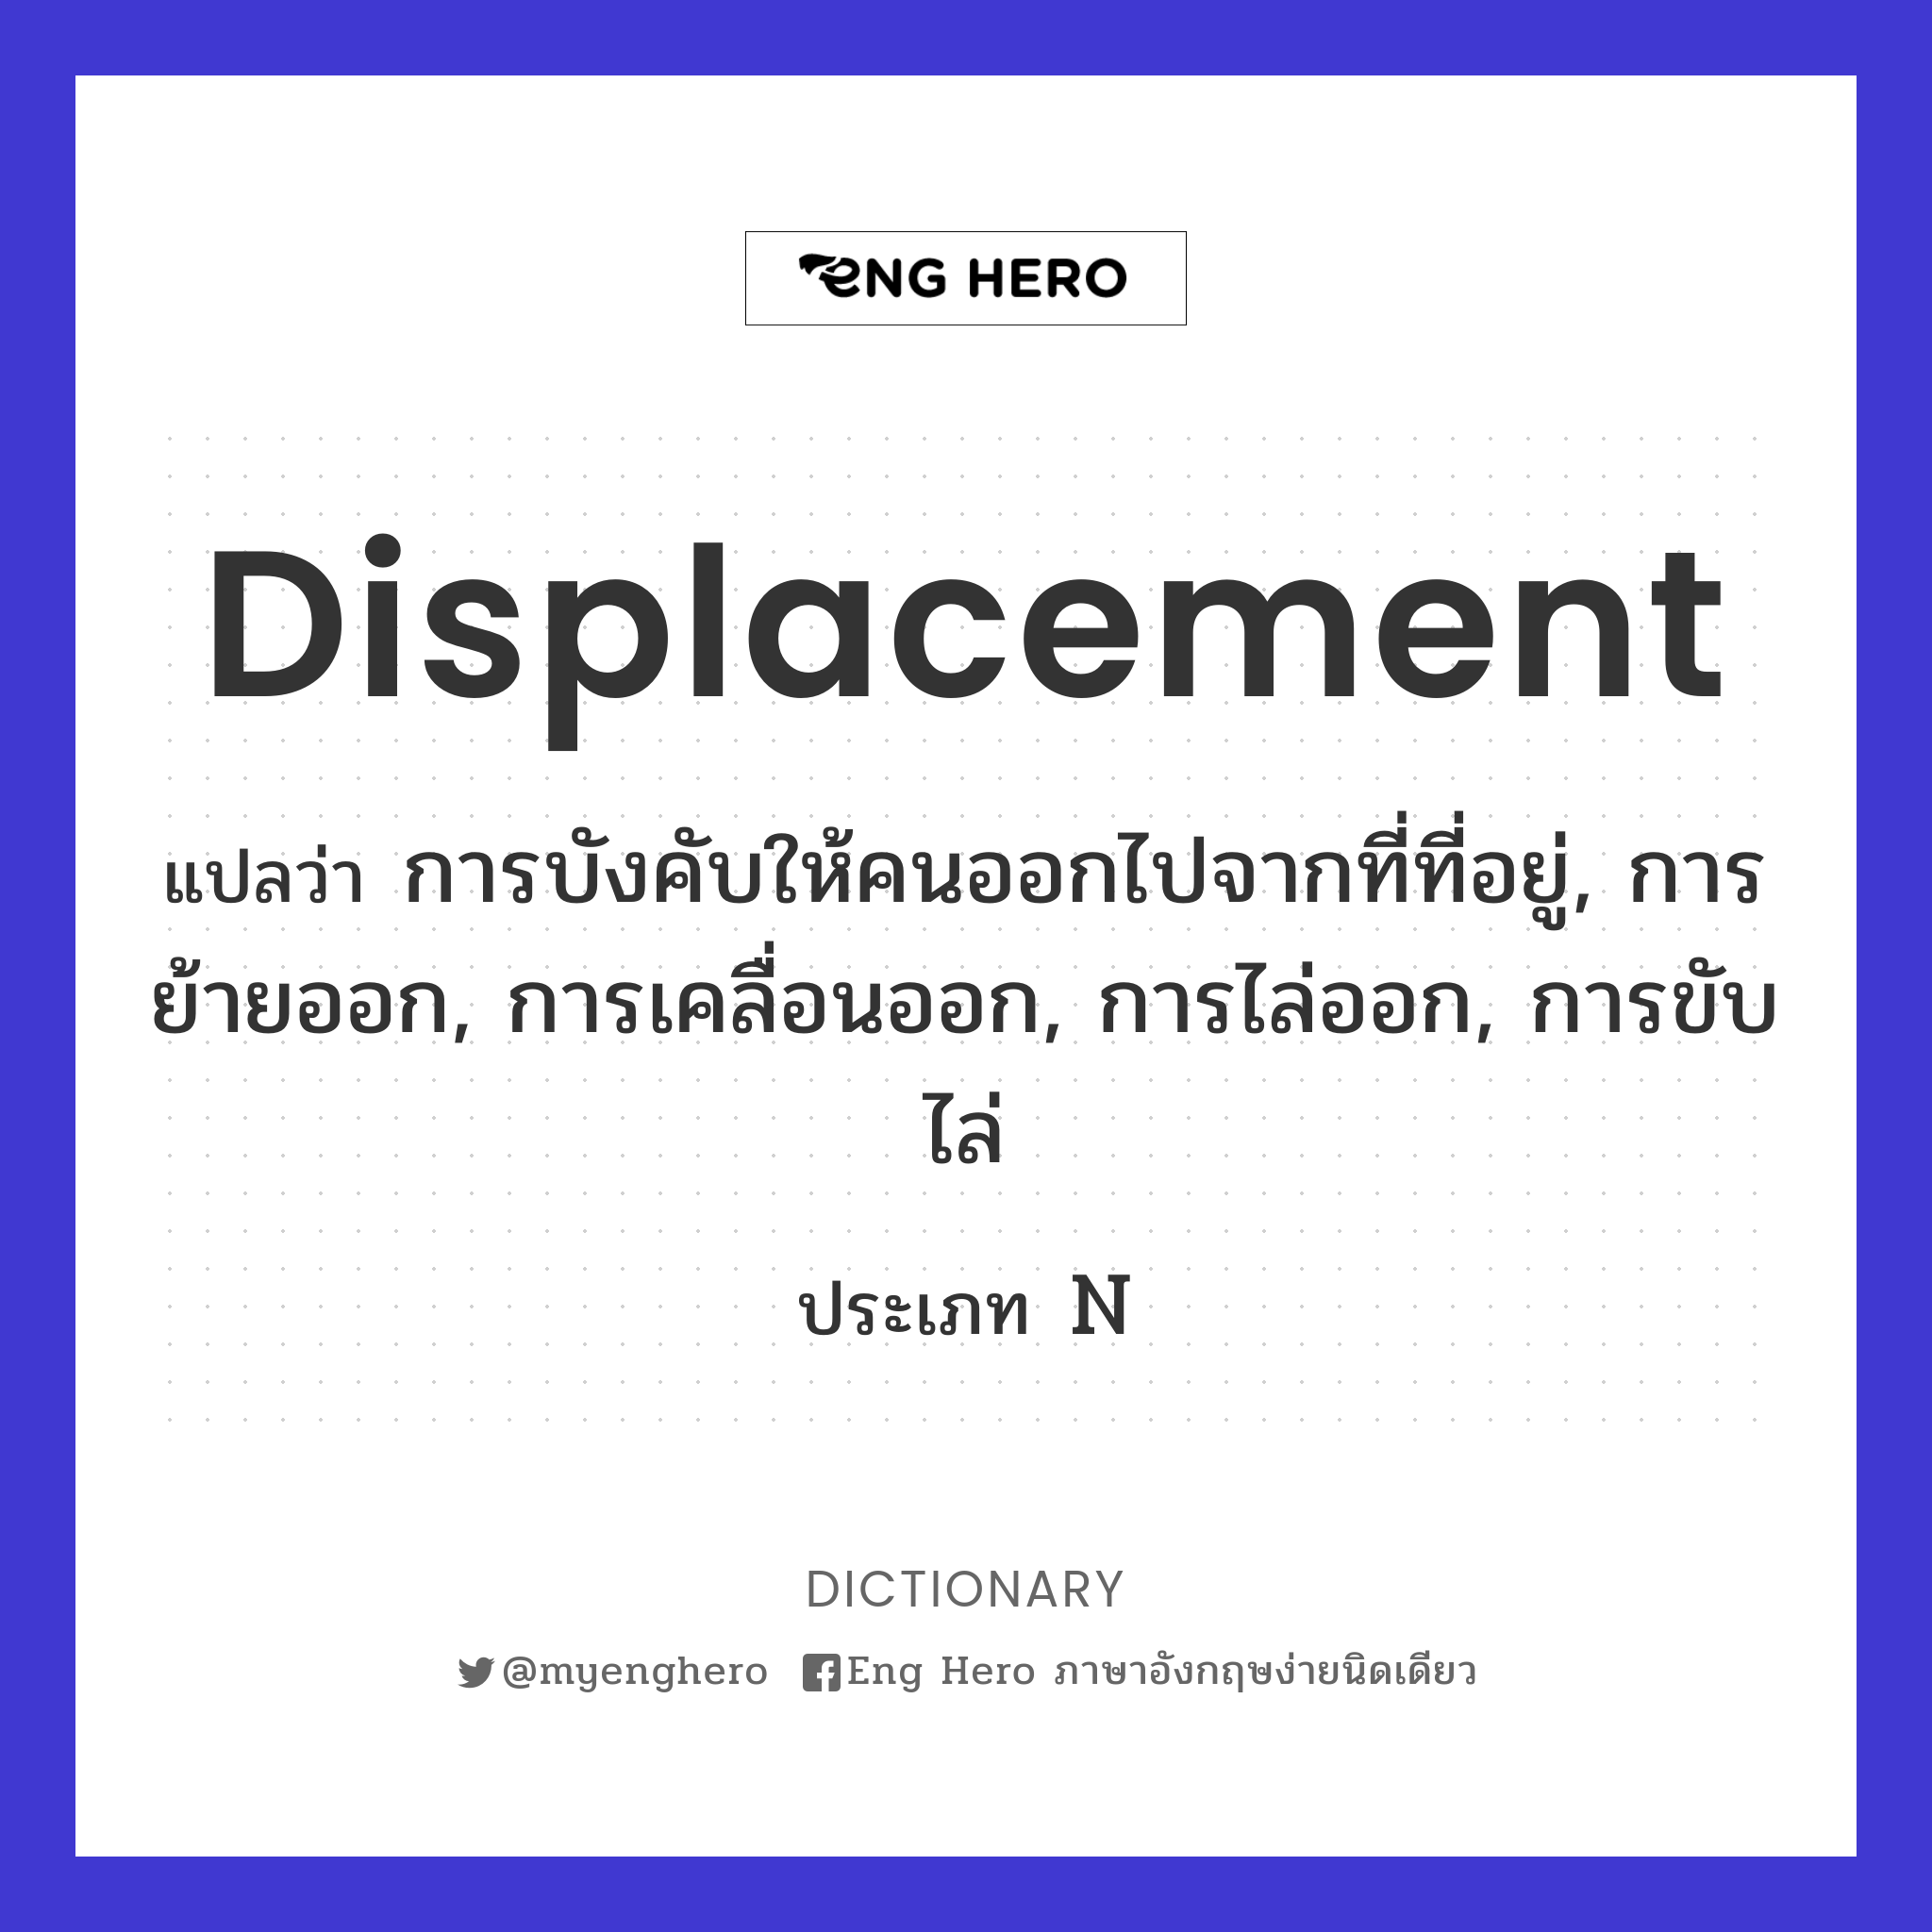 displacement